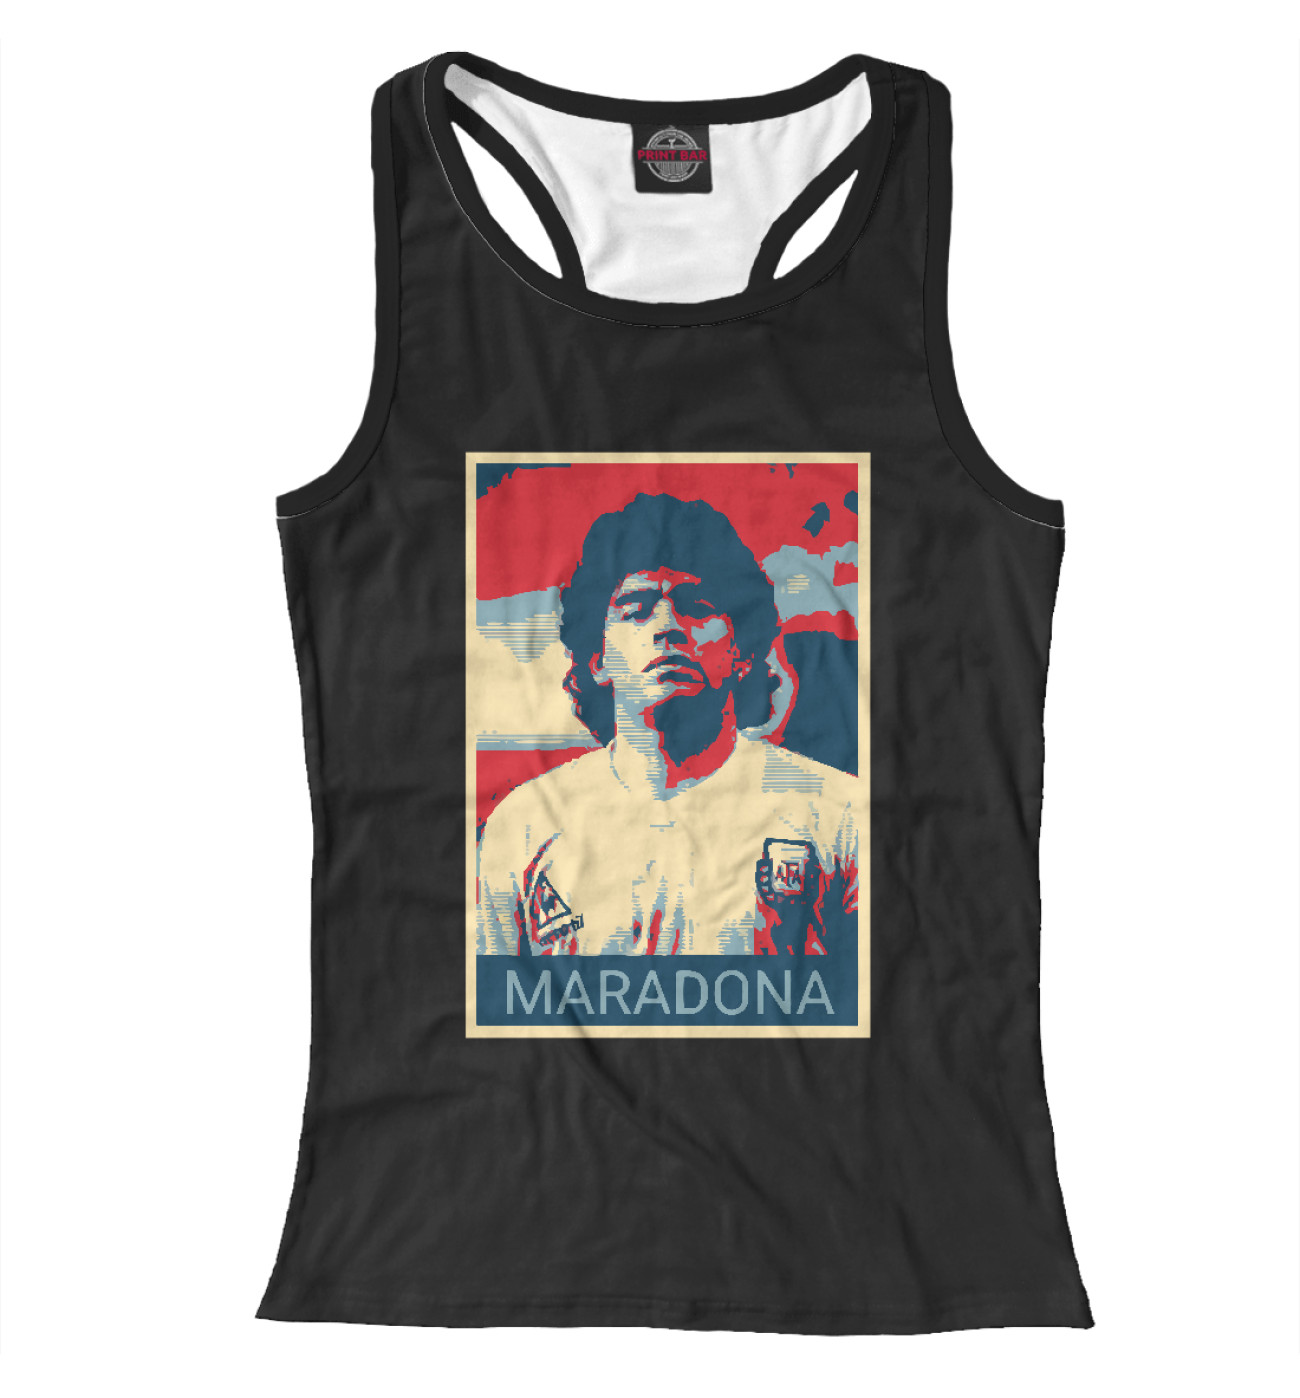 Женская Борцовка Maradona, артикул: FLT-836145-mayb-1